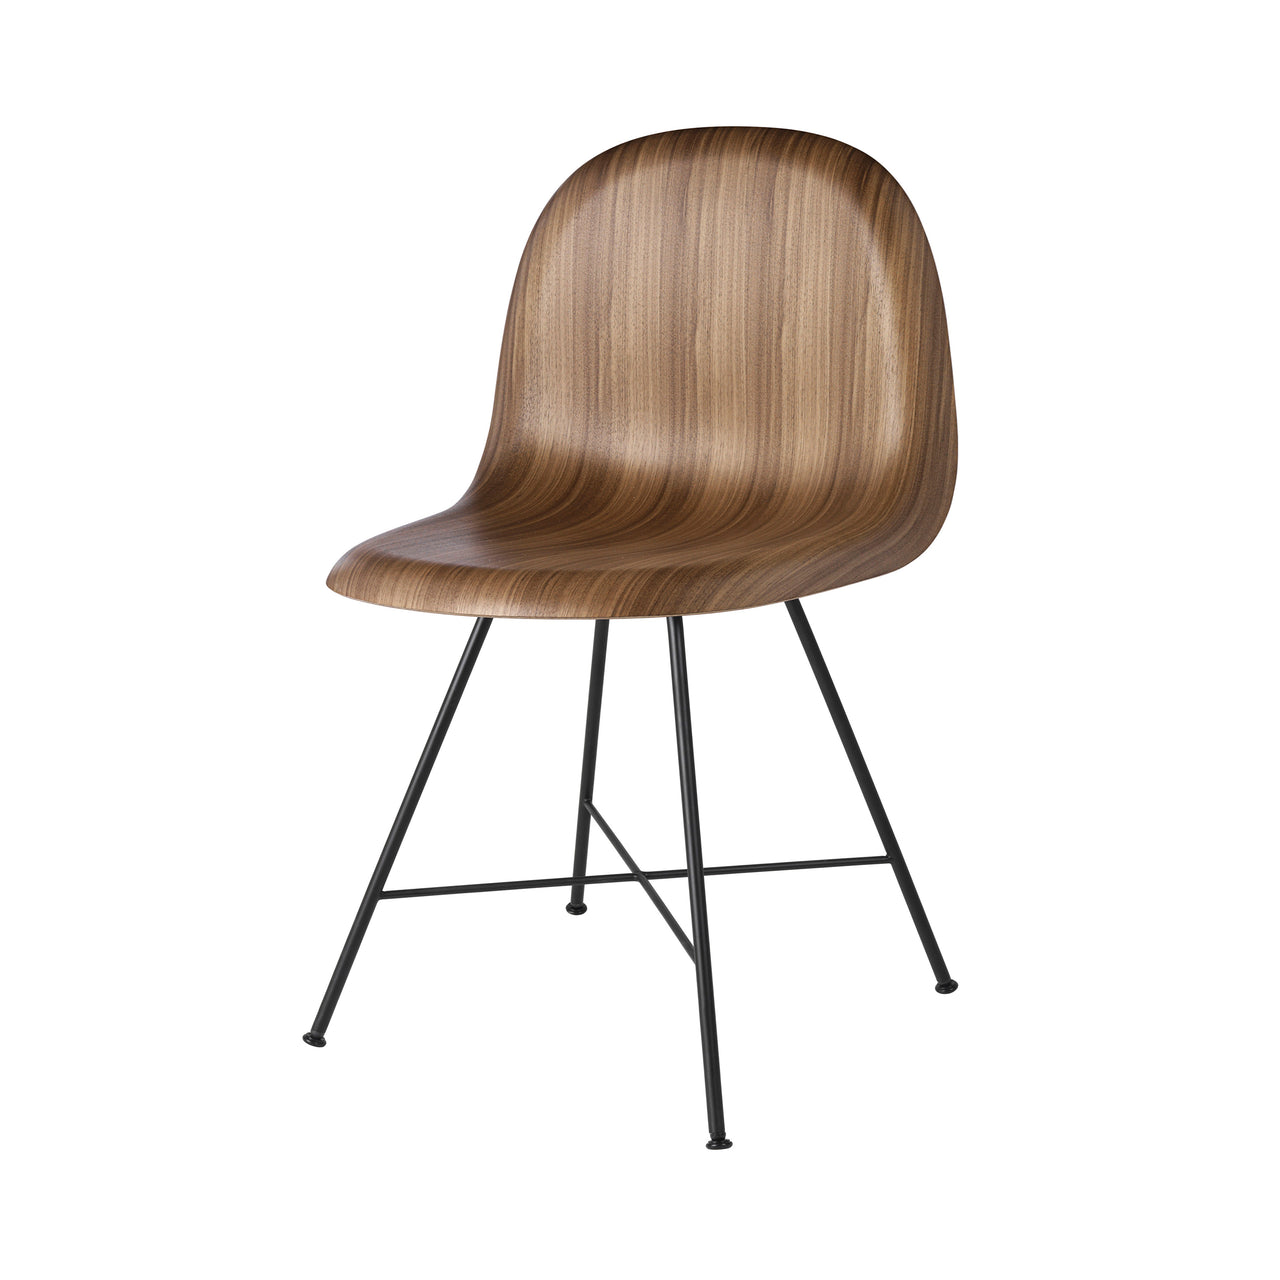 3D Dining Chair: Center Base + American Walnut + Felt Glides